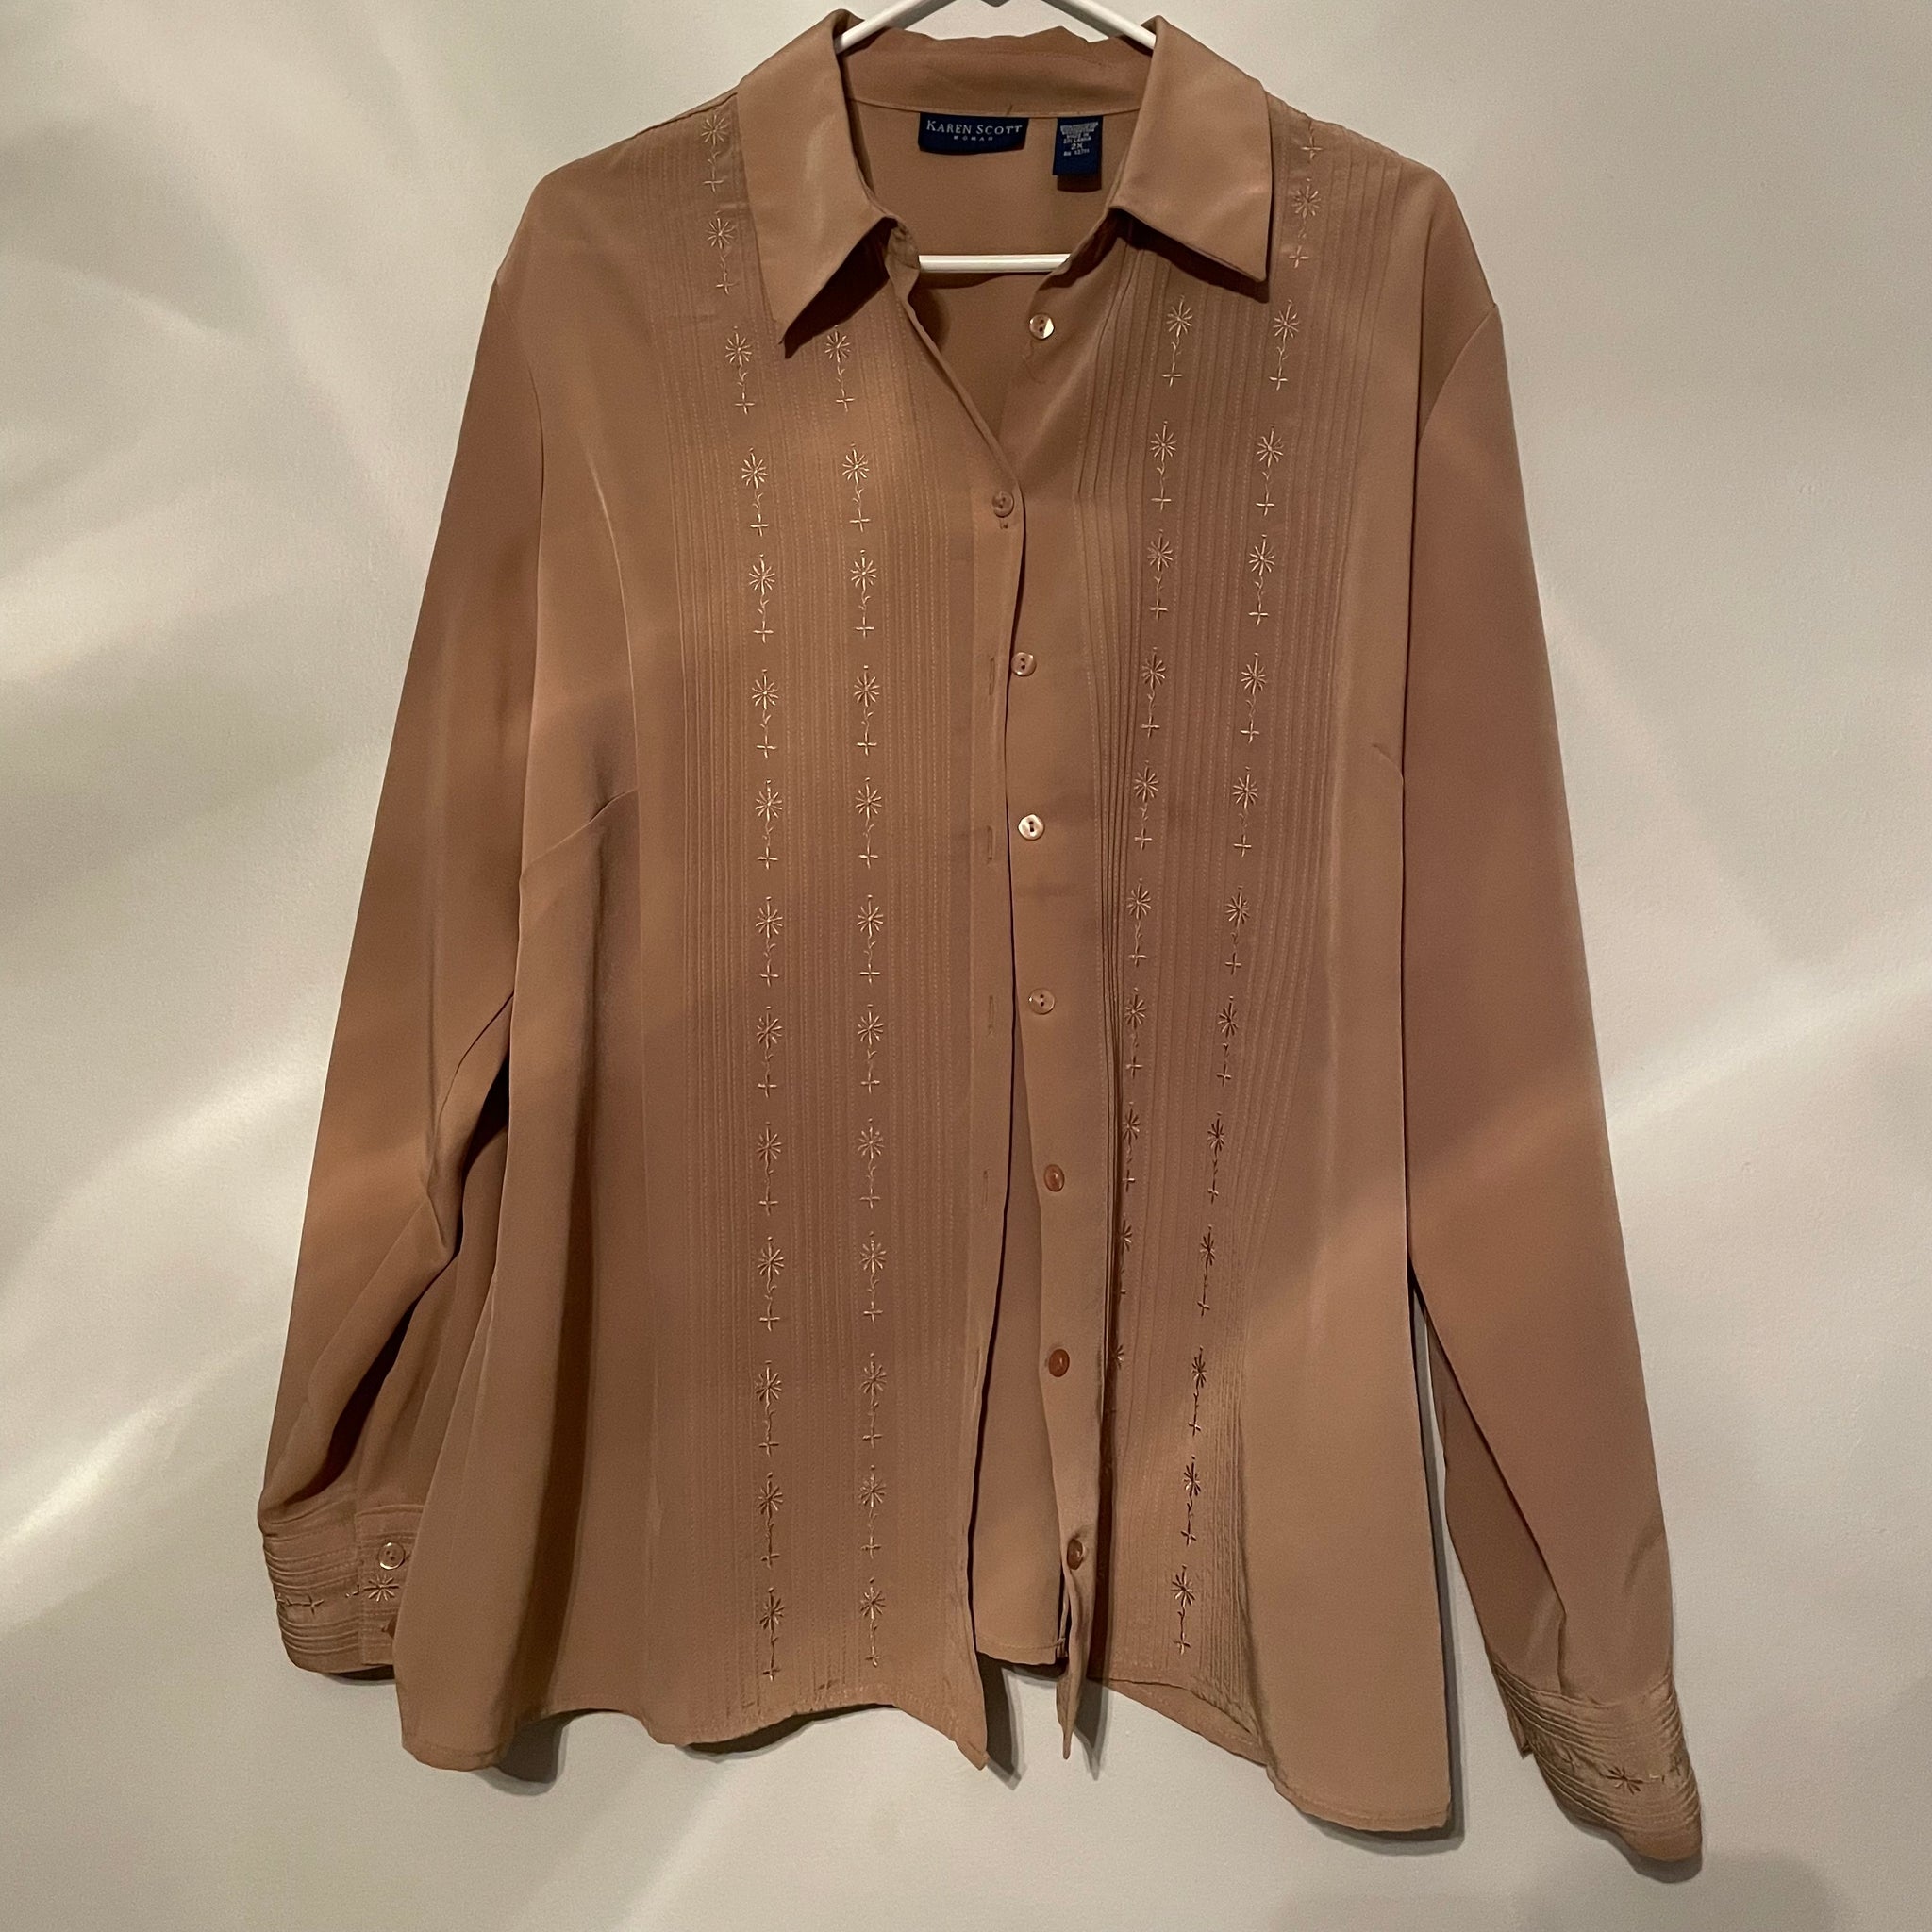 ‘Tobi’ Tan Button-Down Shirt (Up to 2XL)